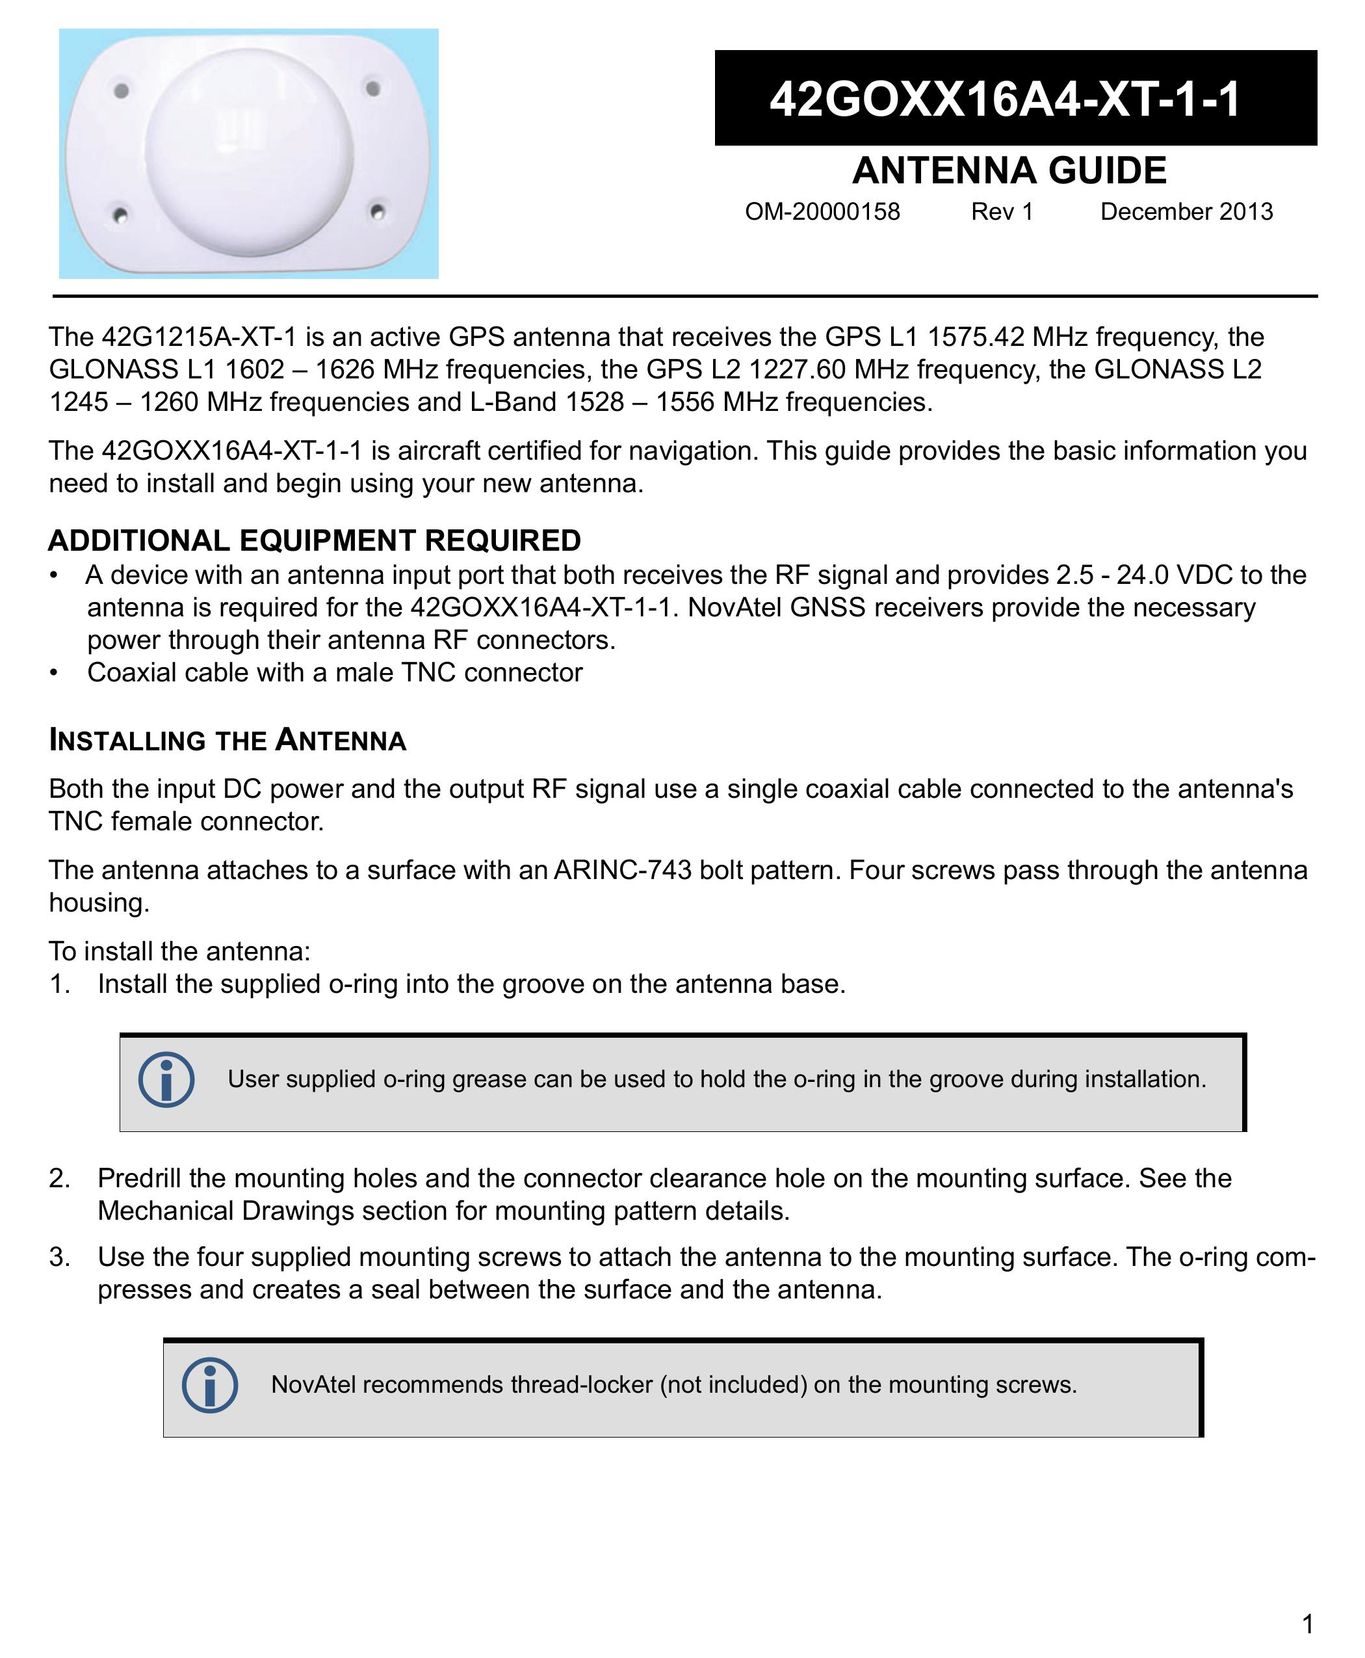 Novatel 42GOXX16A4-XT-1-1 TV Antenna User Manual